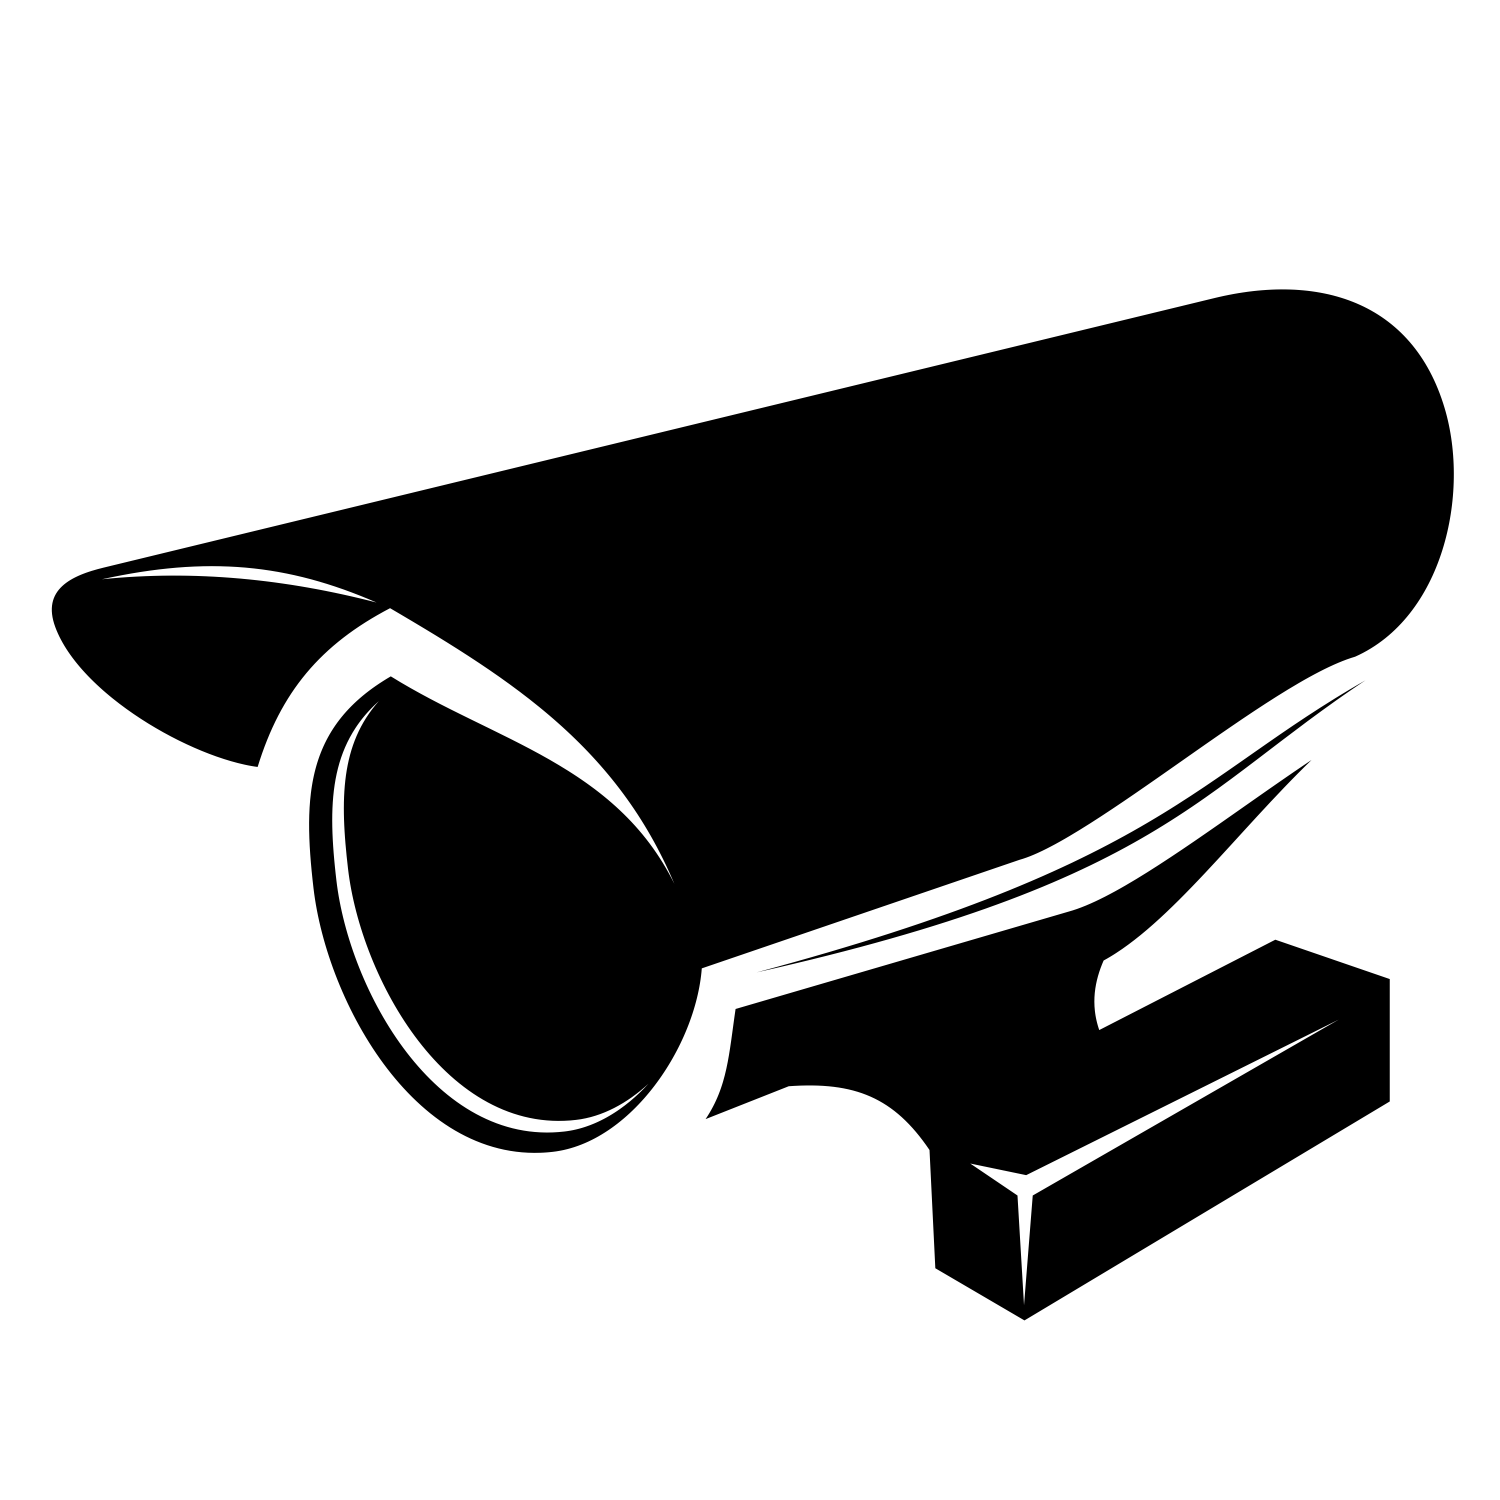 Security camera clipart transparent - ClipartFox